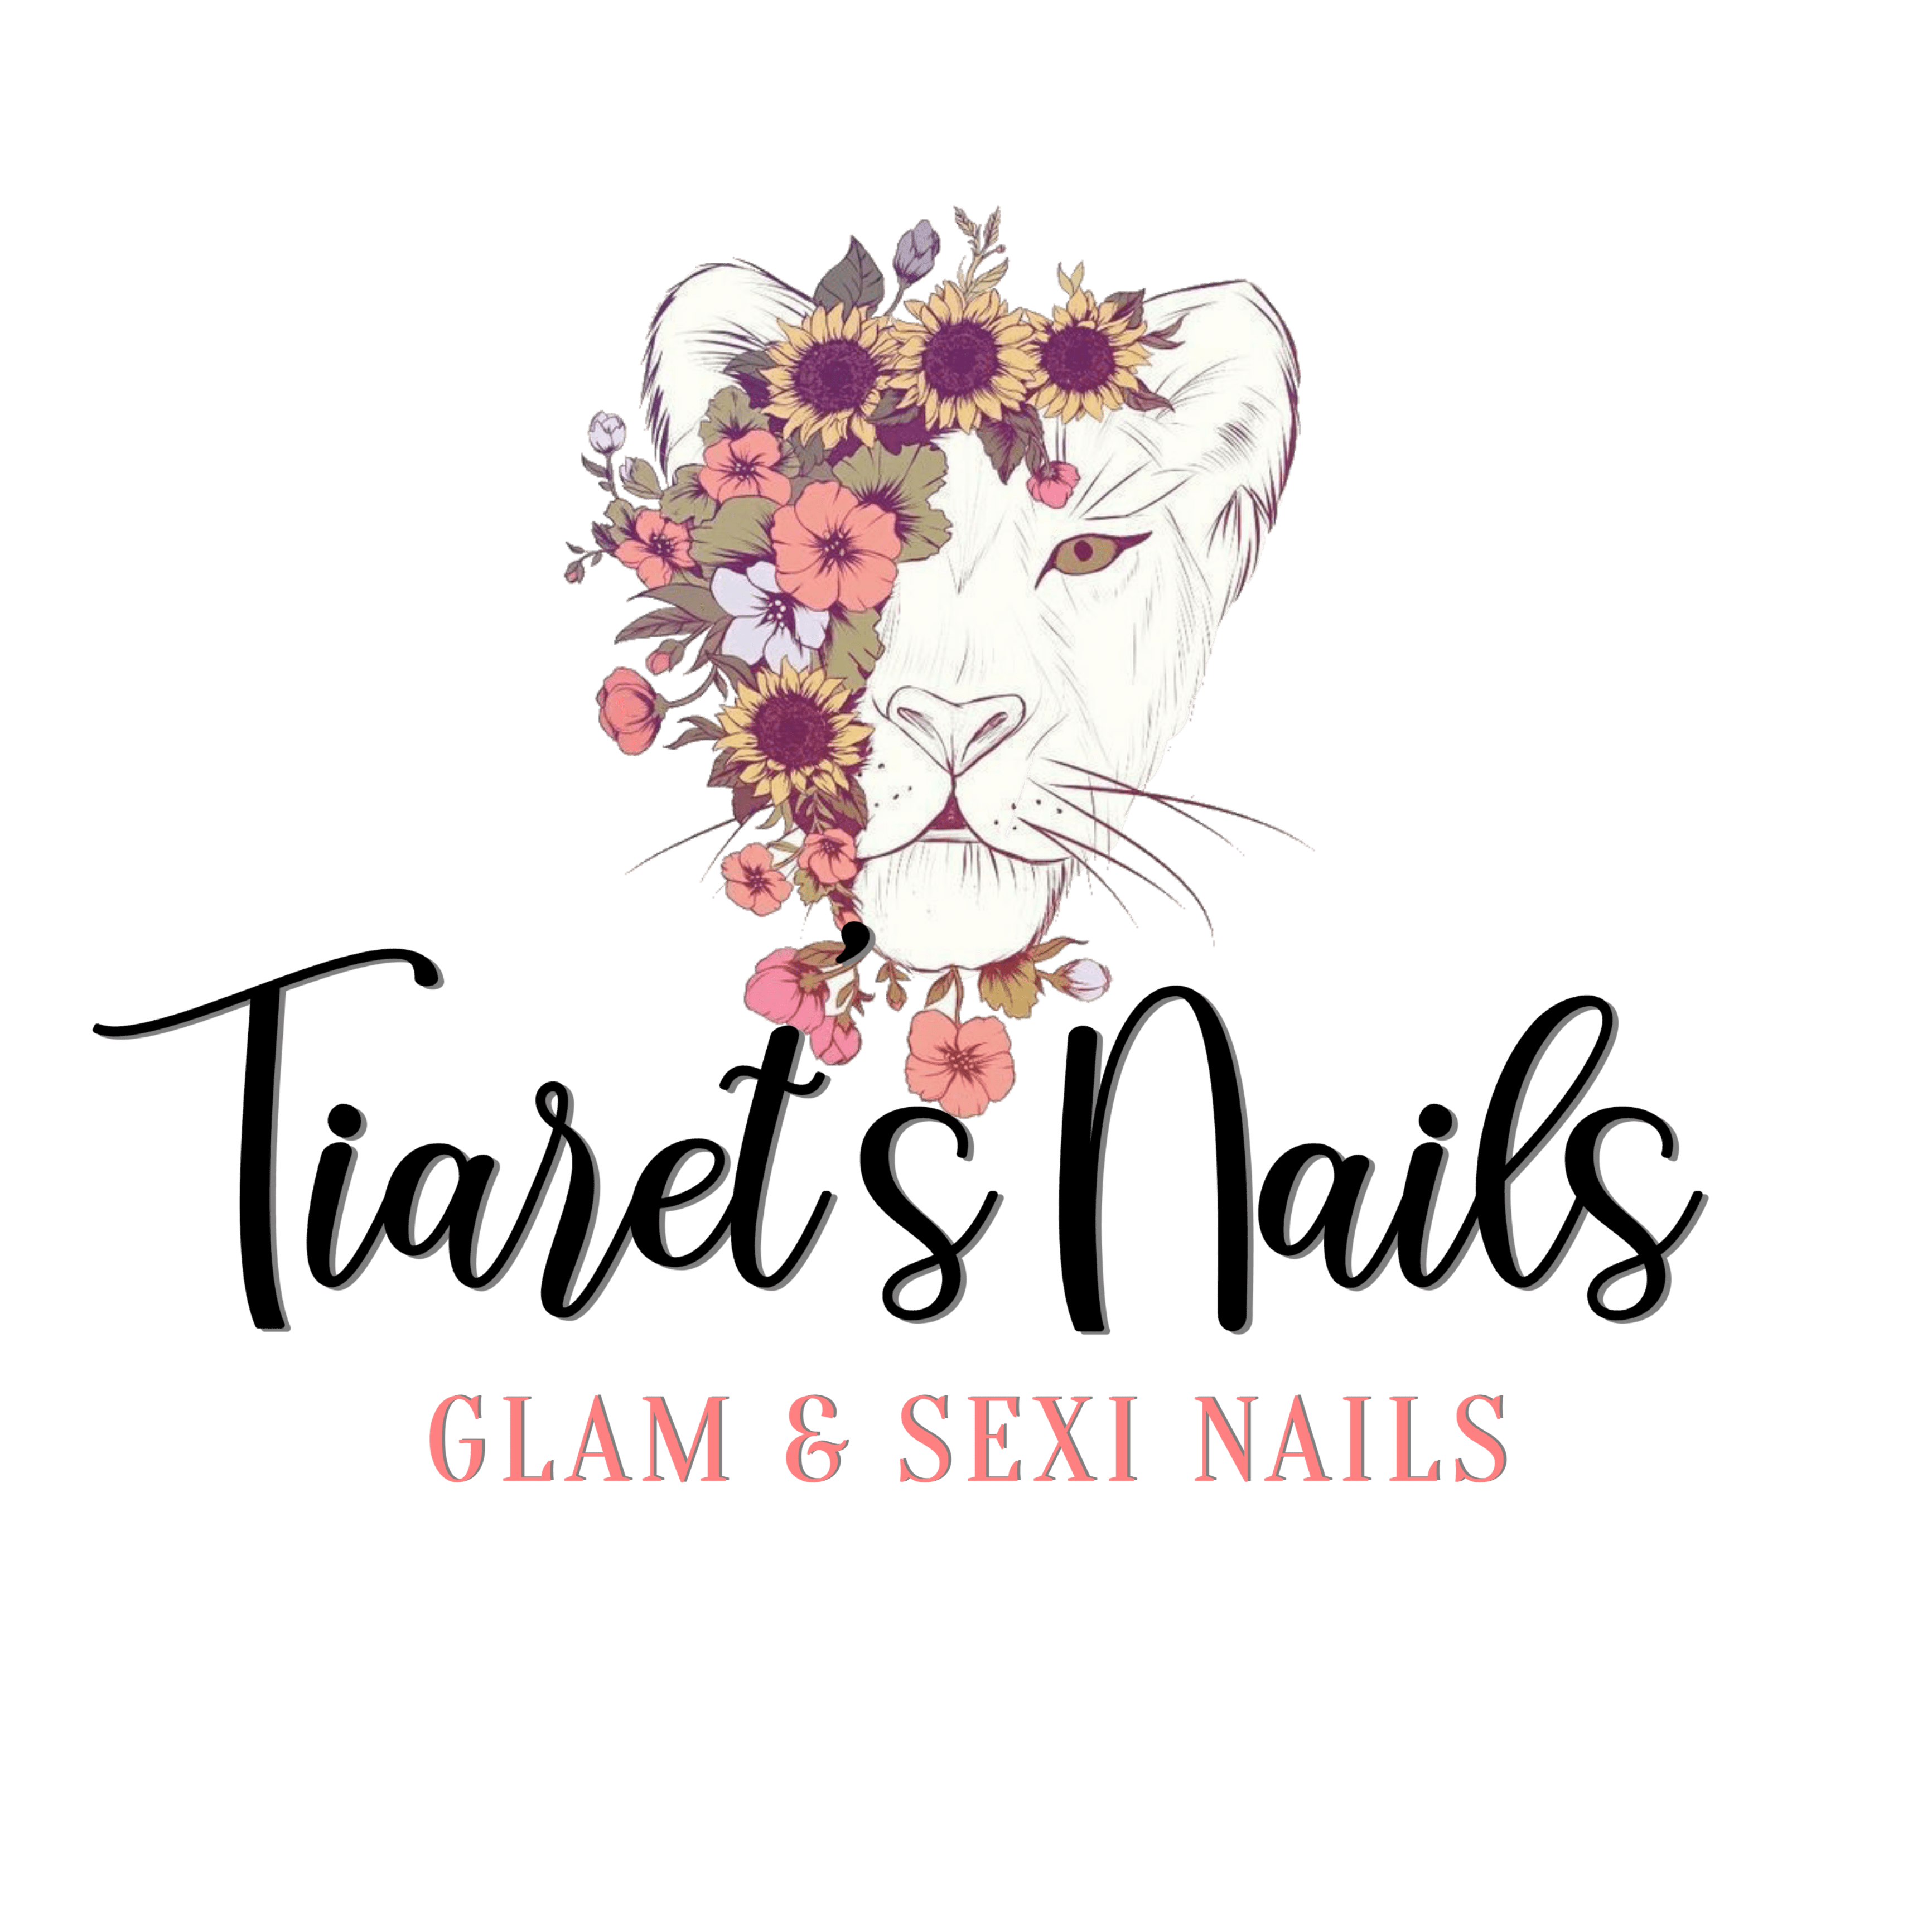 Tiaret's Nails